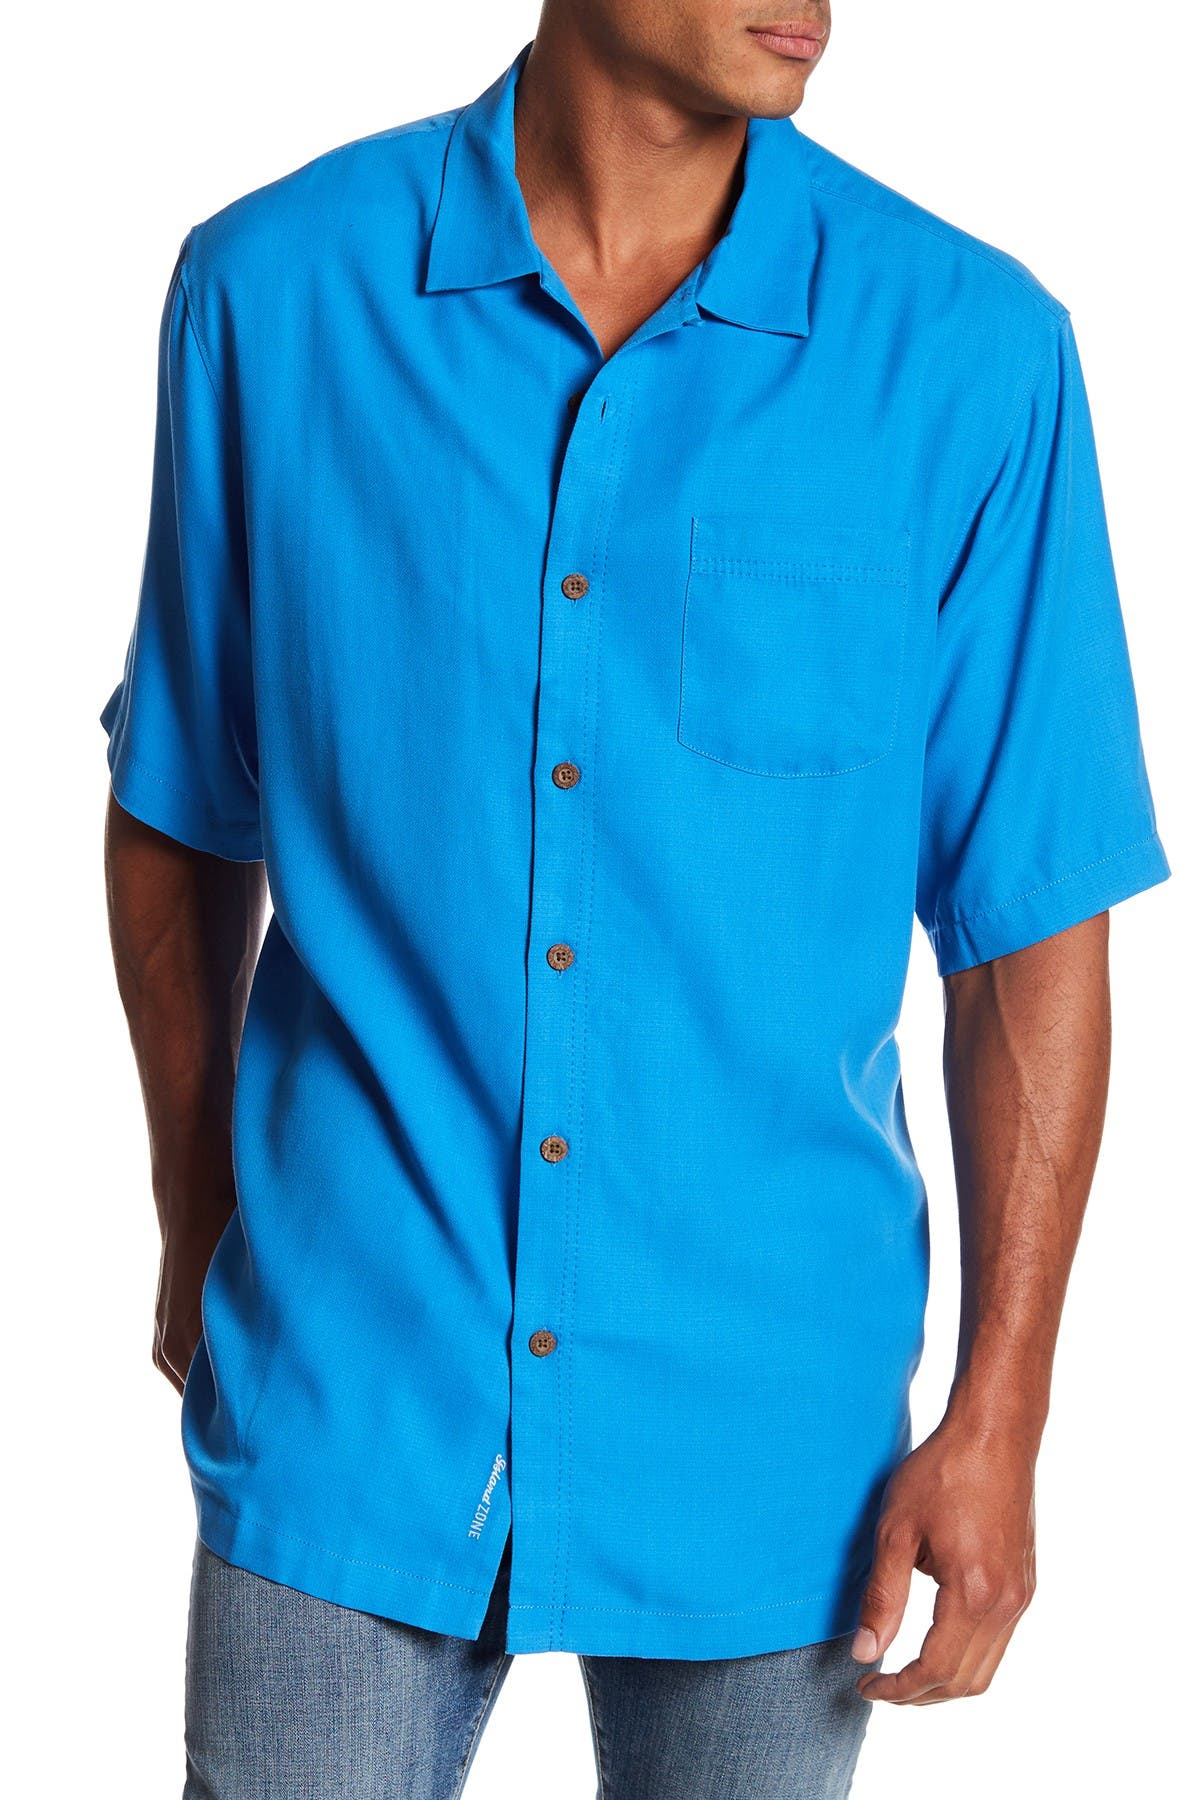 tommy bahama original fit shirts